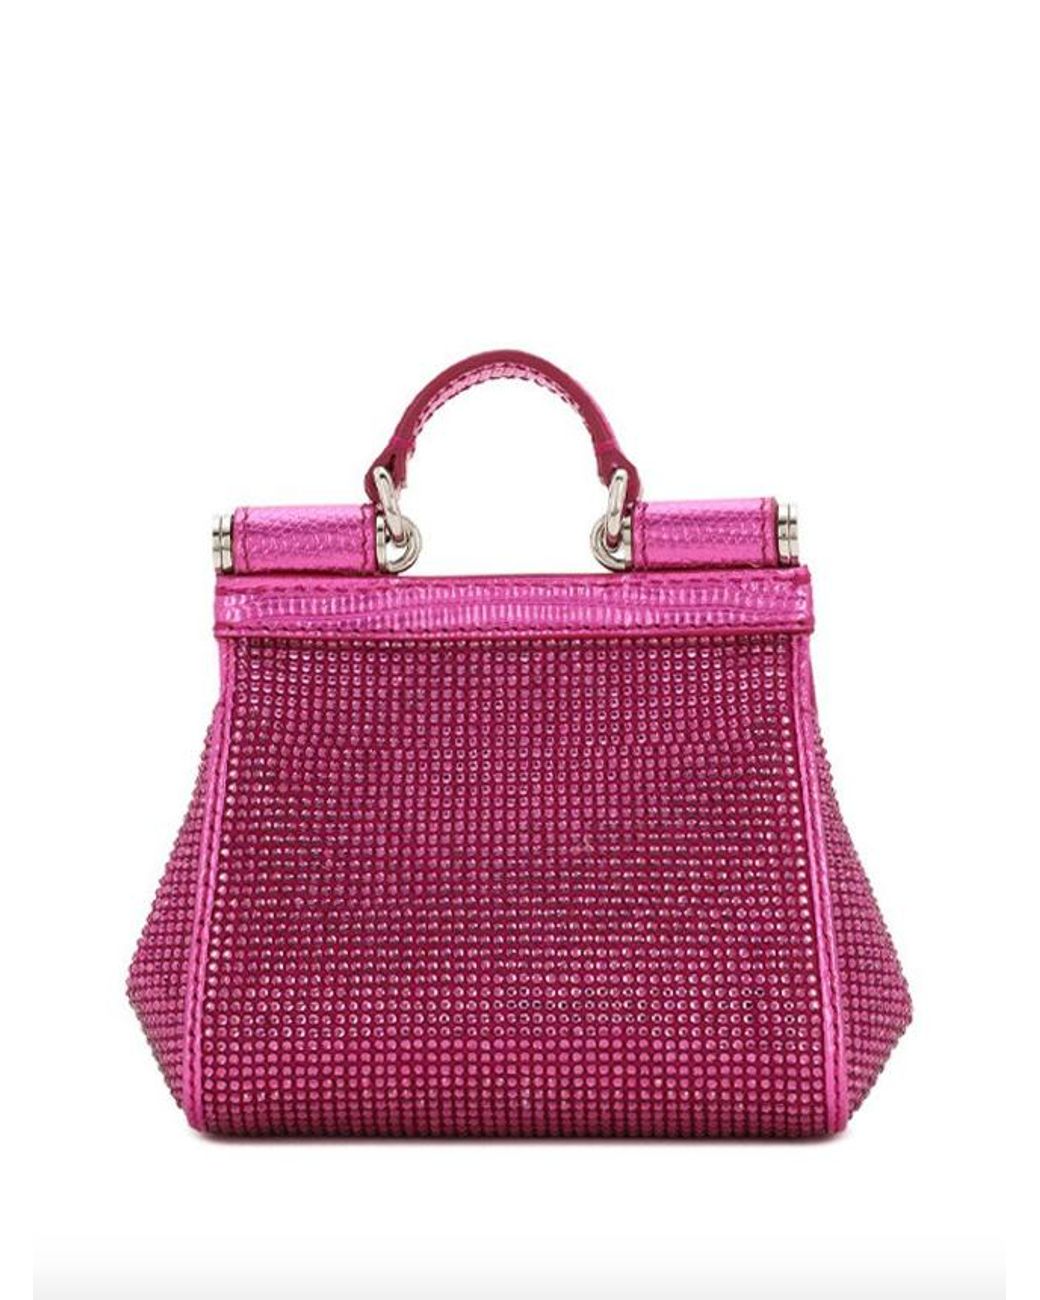 Dolce & Gabbana Mini Sicily Pink @DolceGabbana #dolceandgabbana  #luxuryblogger #handbags 